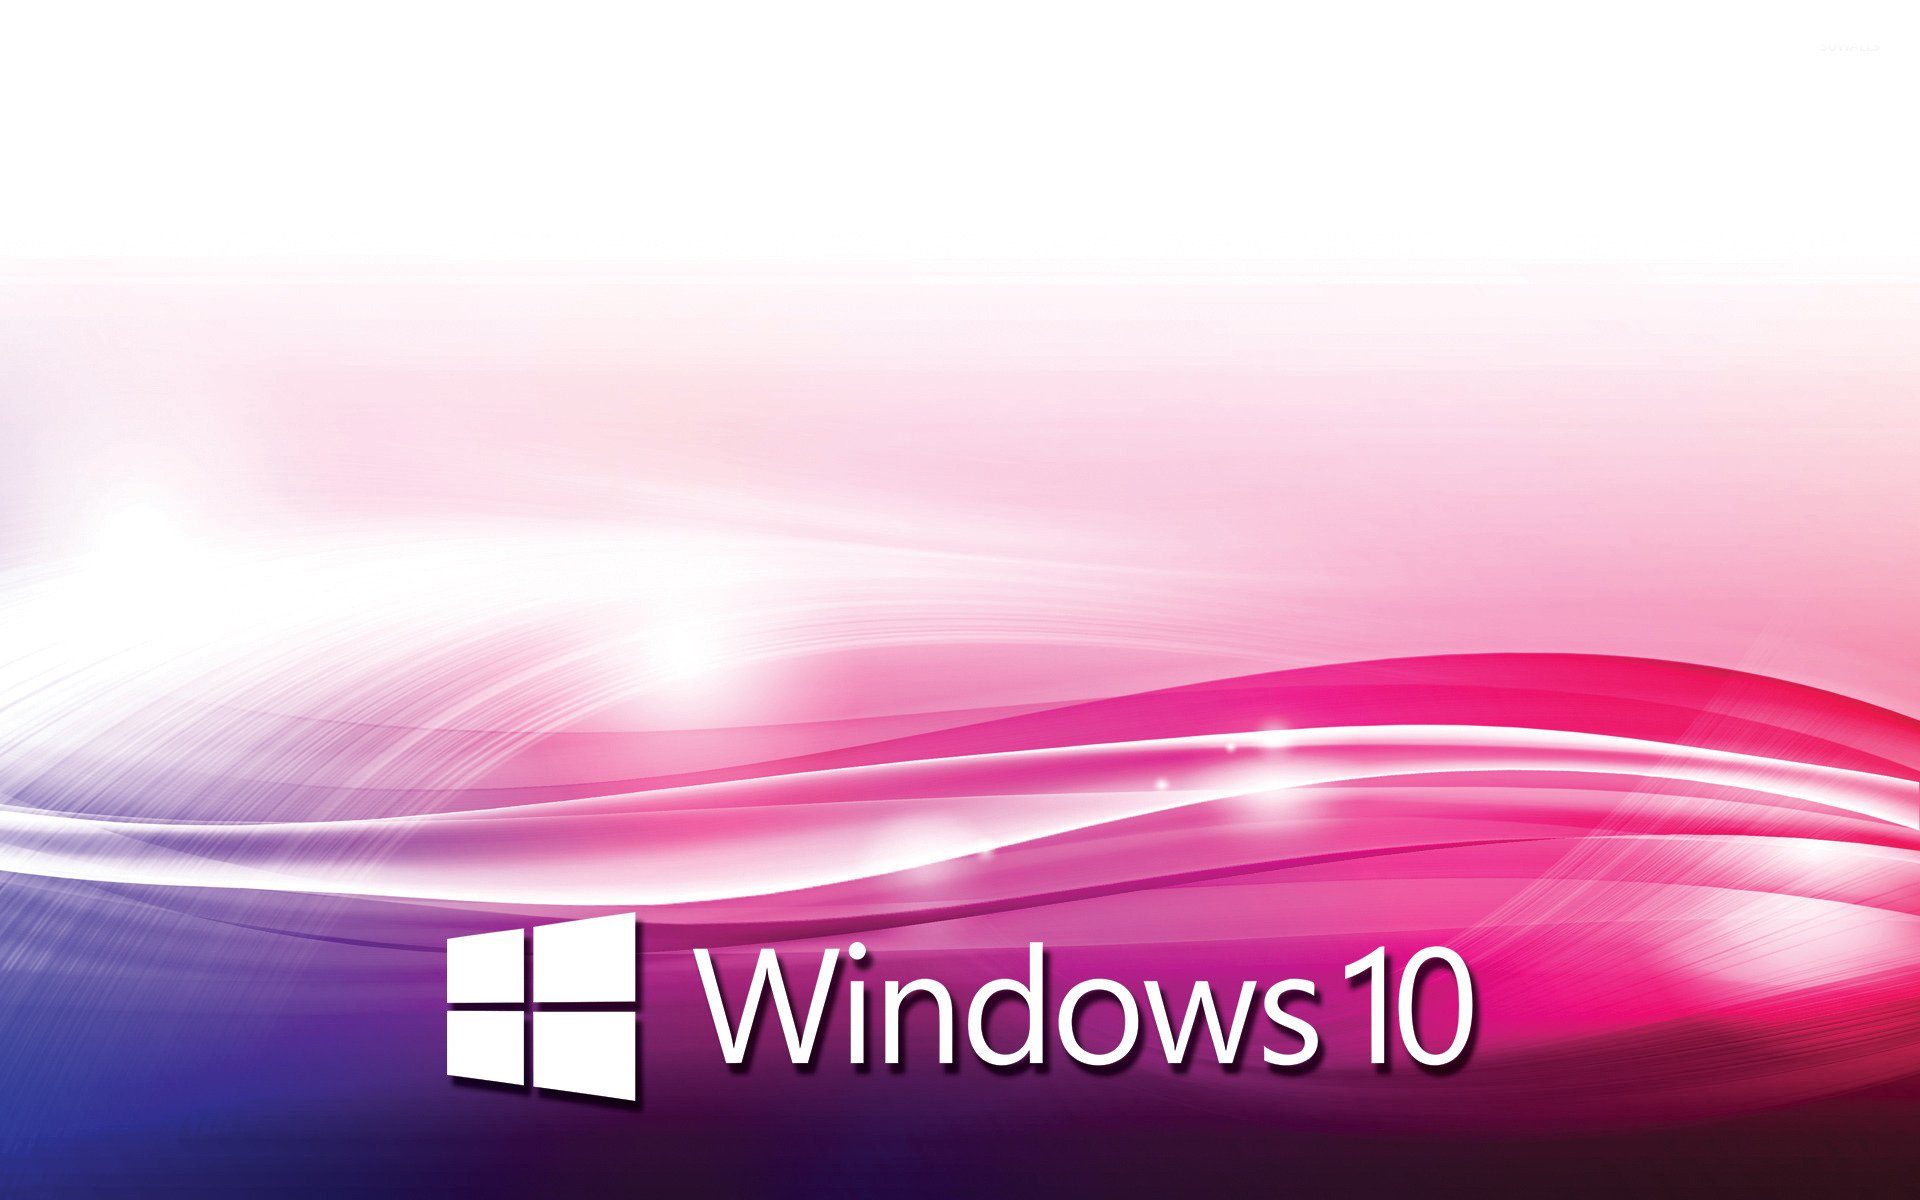 Windows 10 white text logo on purple waves wallpaper   Computer